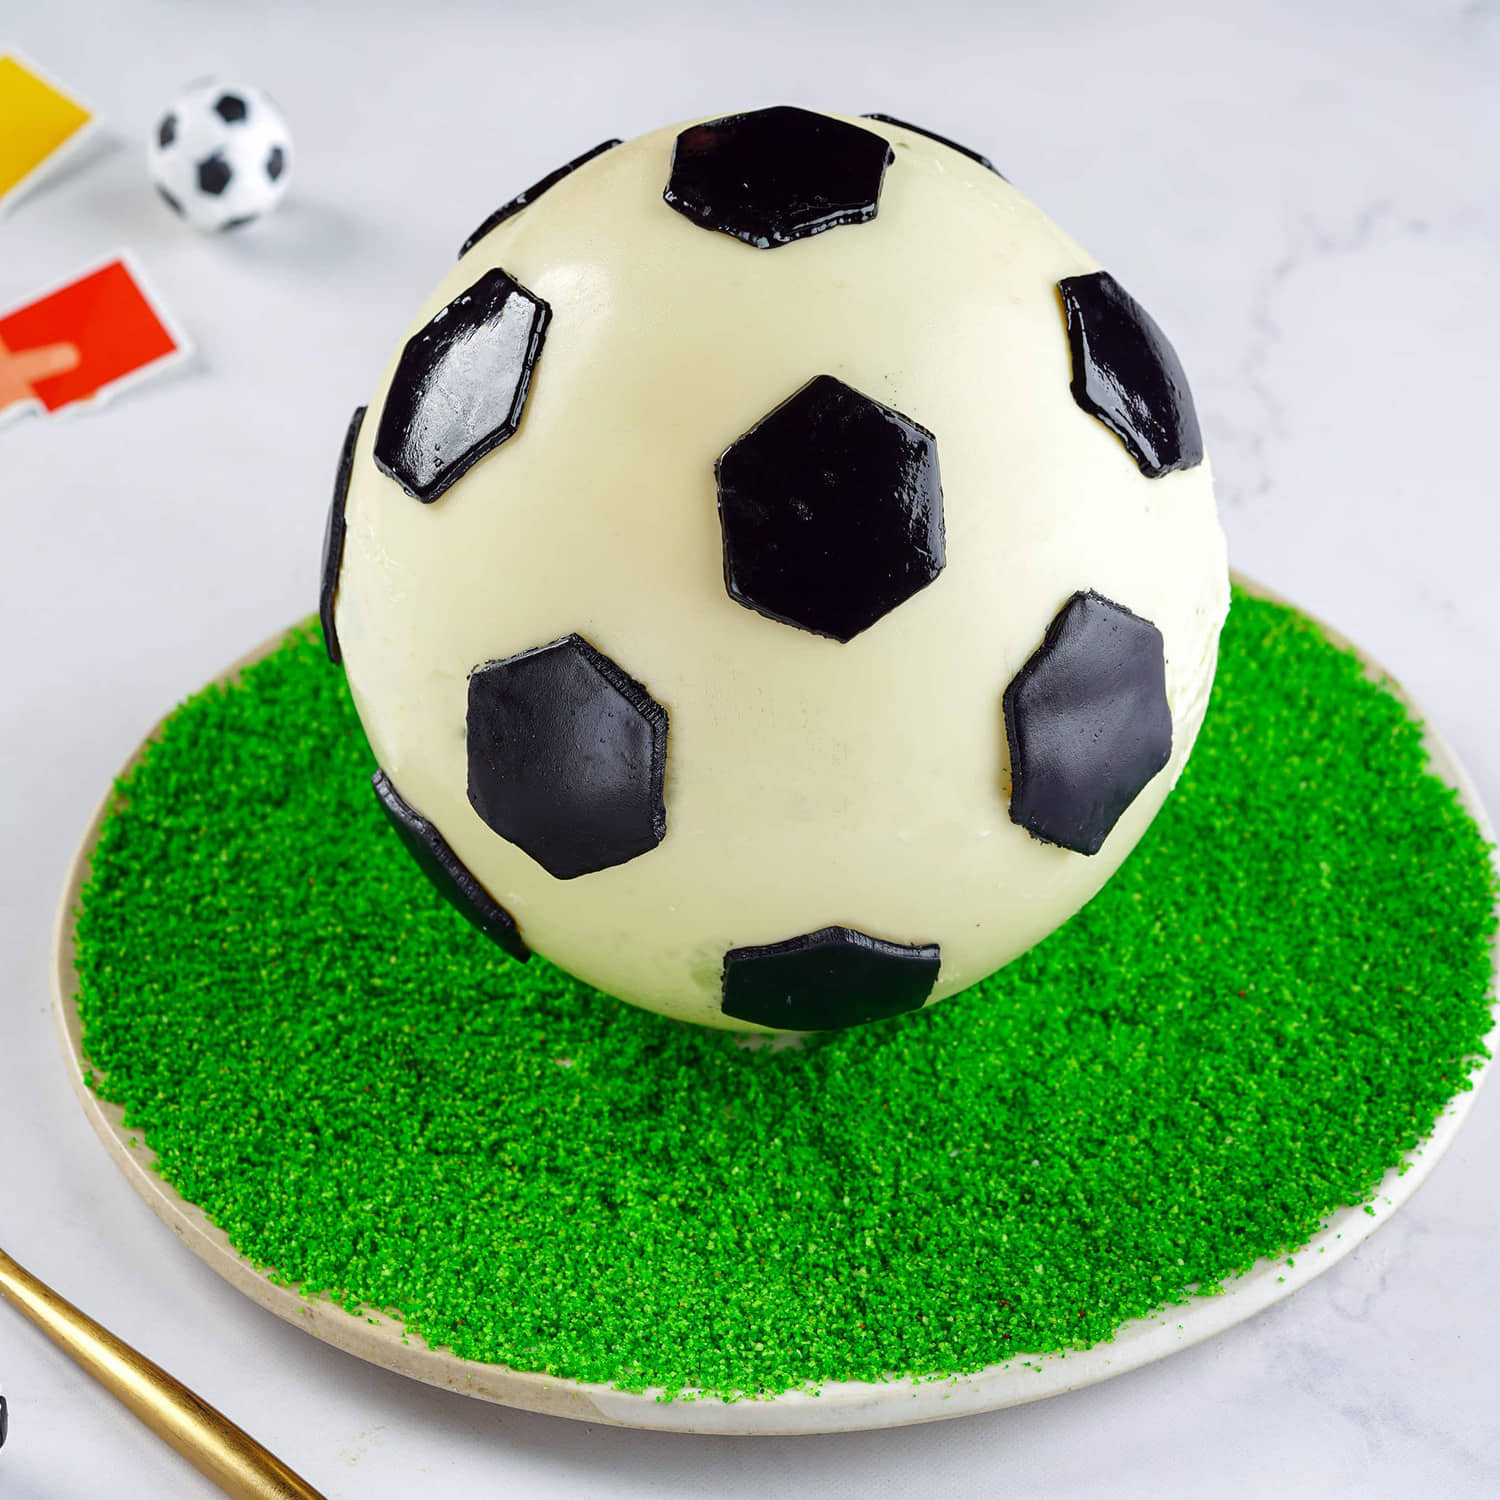 Football Theme Cake|Customized Cake Shop in Hyderabad|CakeSmash.in